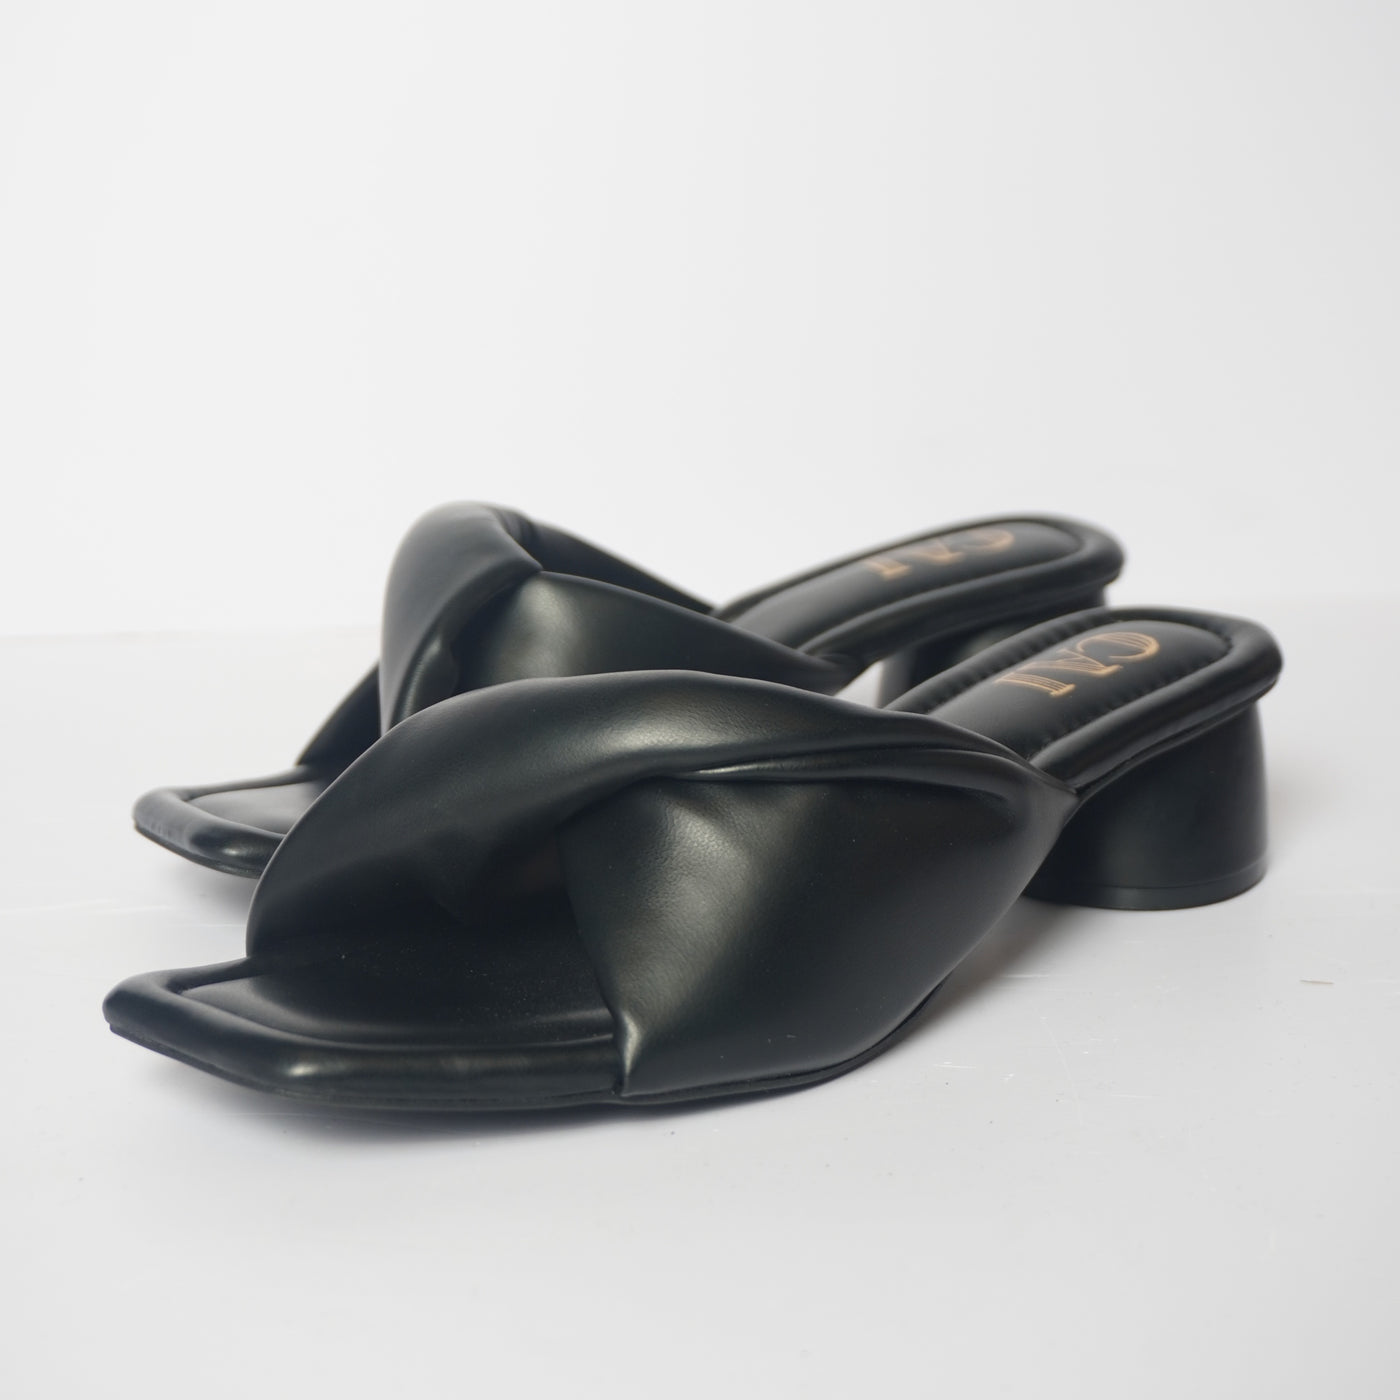 Black Enveloped Bow Heels